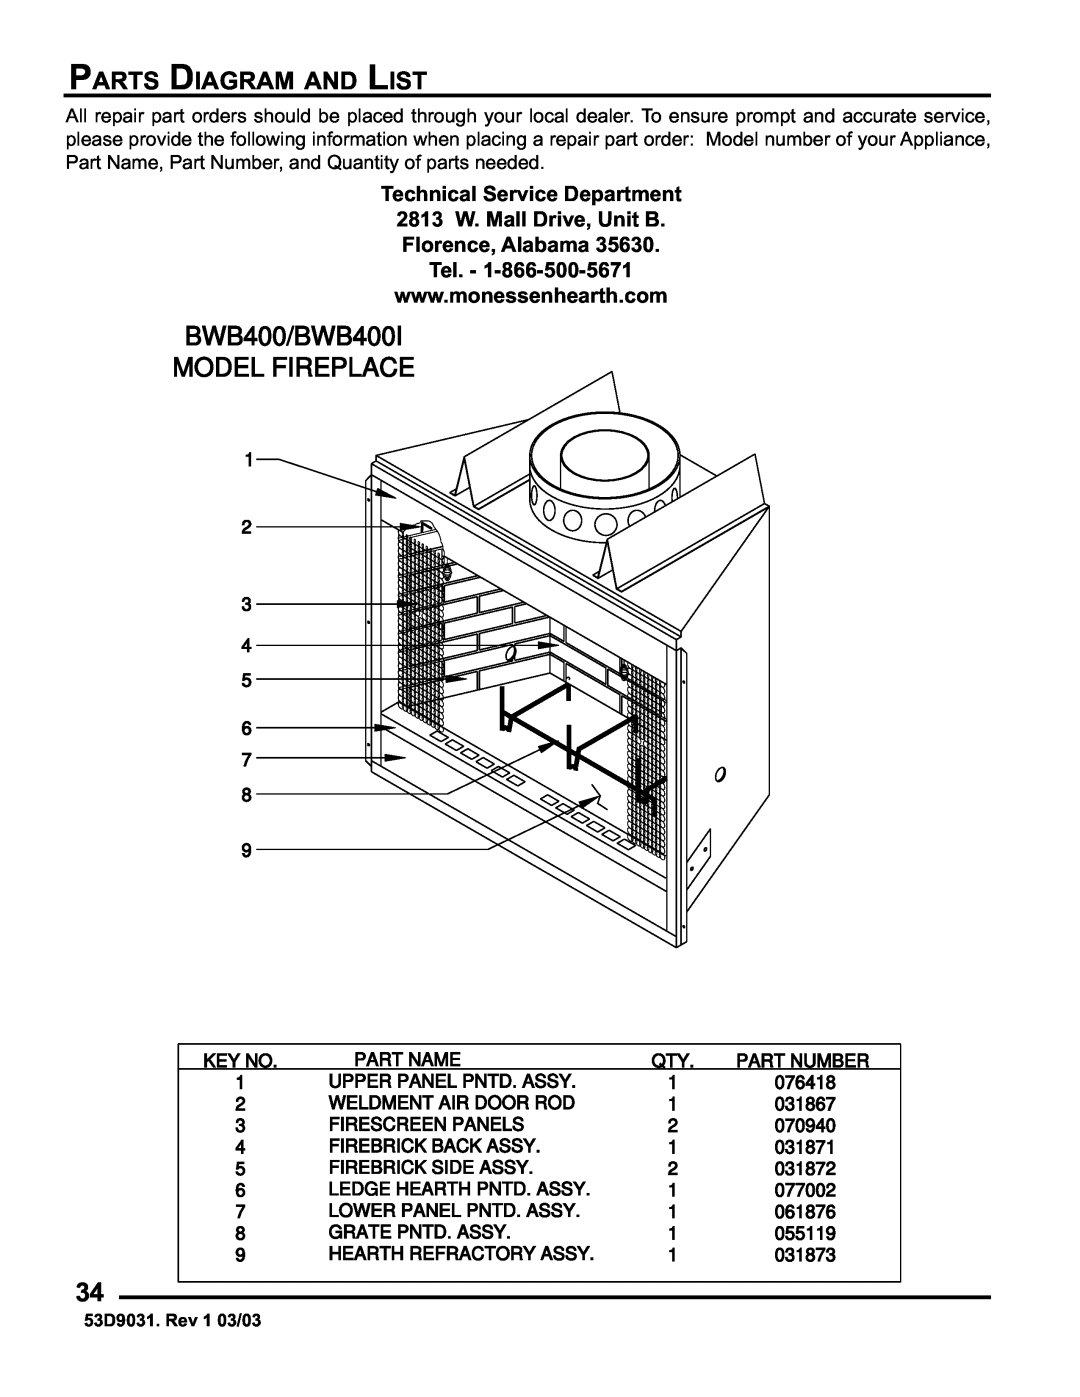 Monessen Hearth BWBC400I manual Parts Diagram And List, BWB400/BWB400I MODEL FIREPLACE 